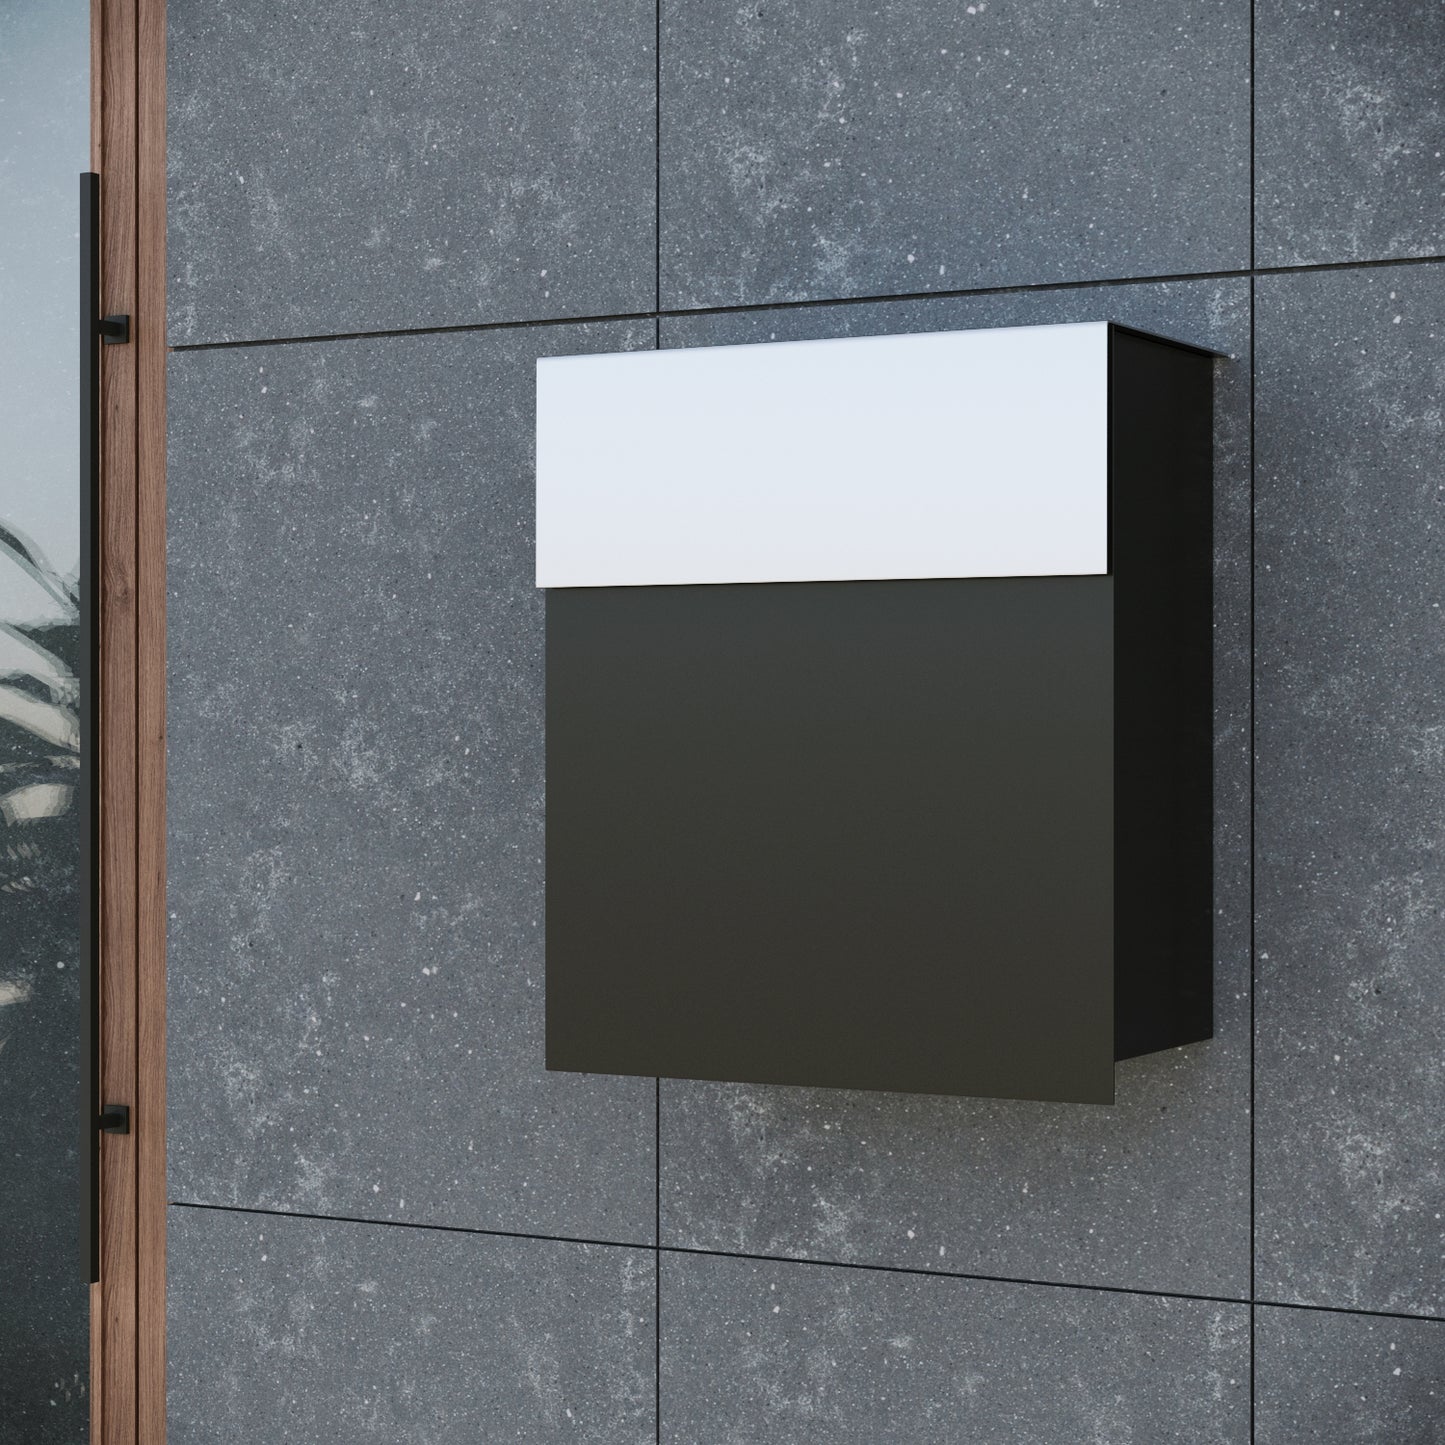 ALTO by Bravios - Modern wall-mounted gray mailbox